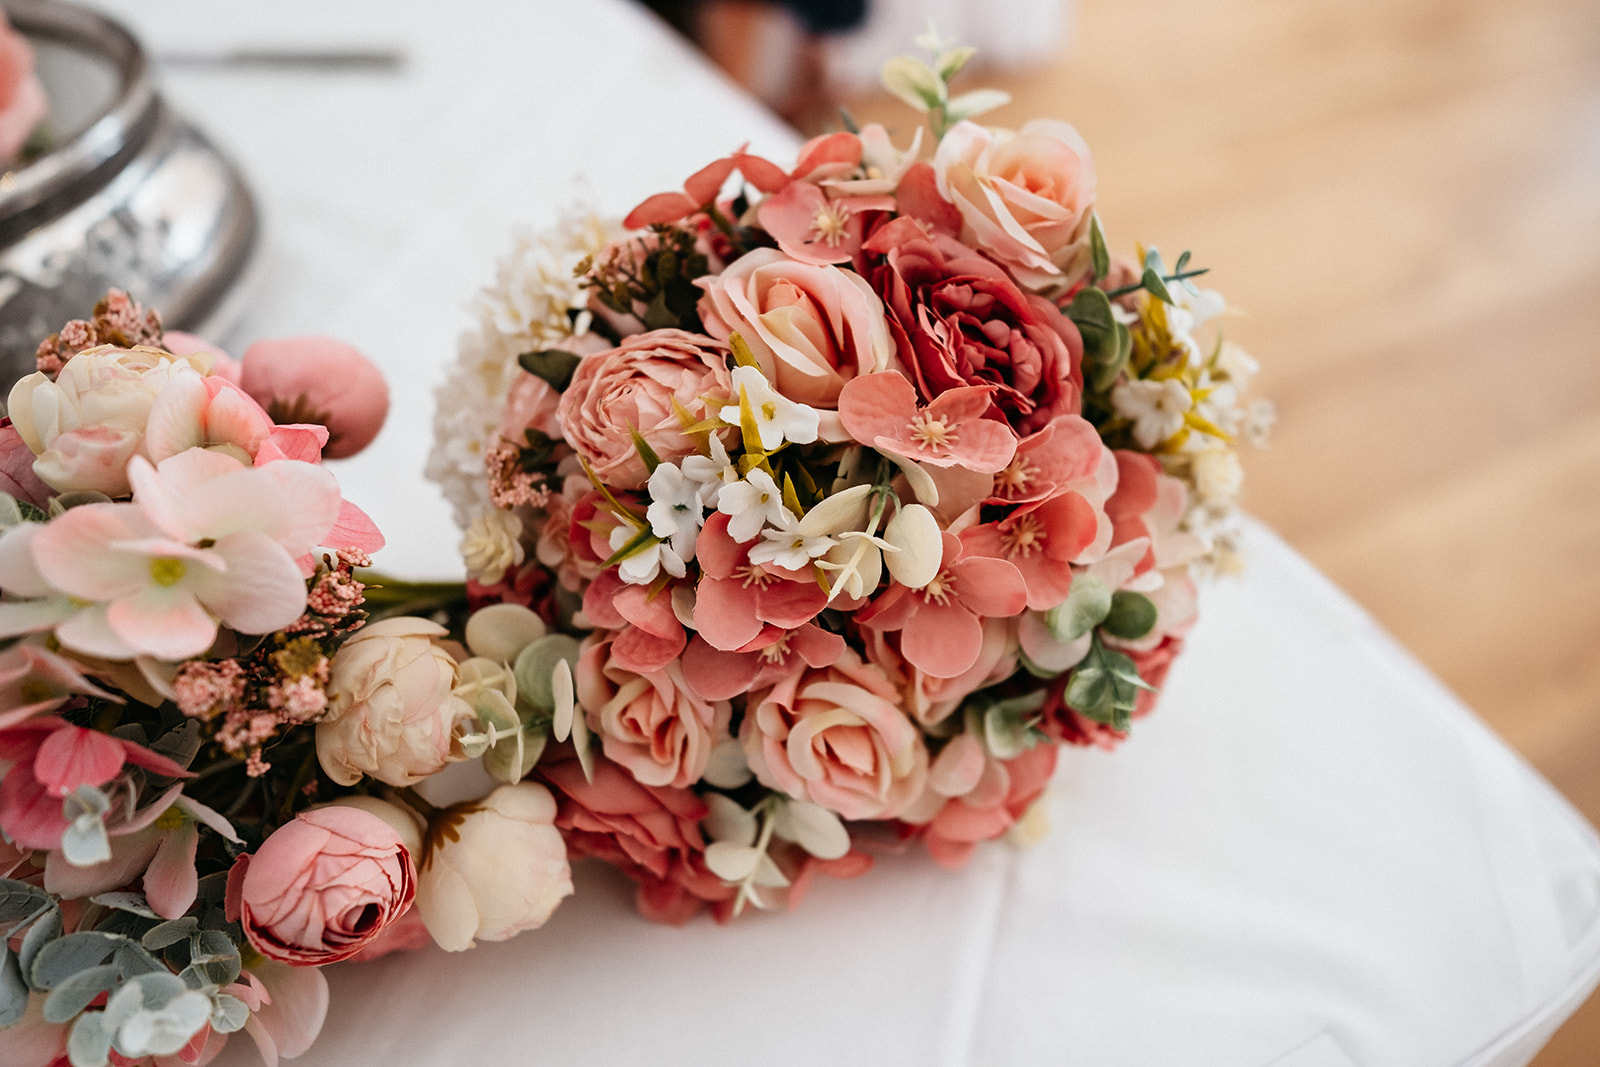 Wedding bouquet ideas